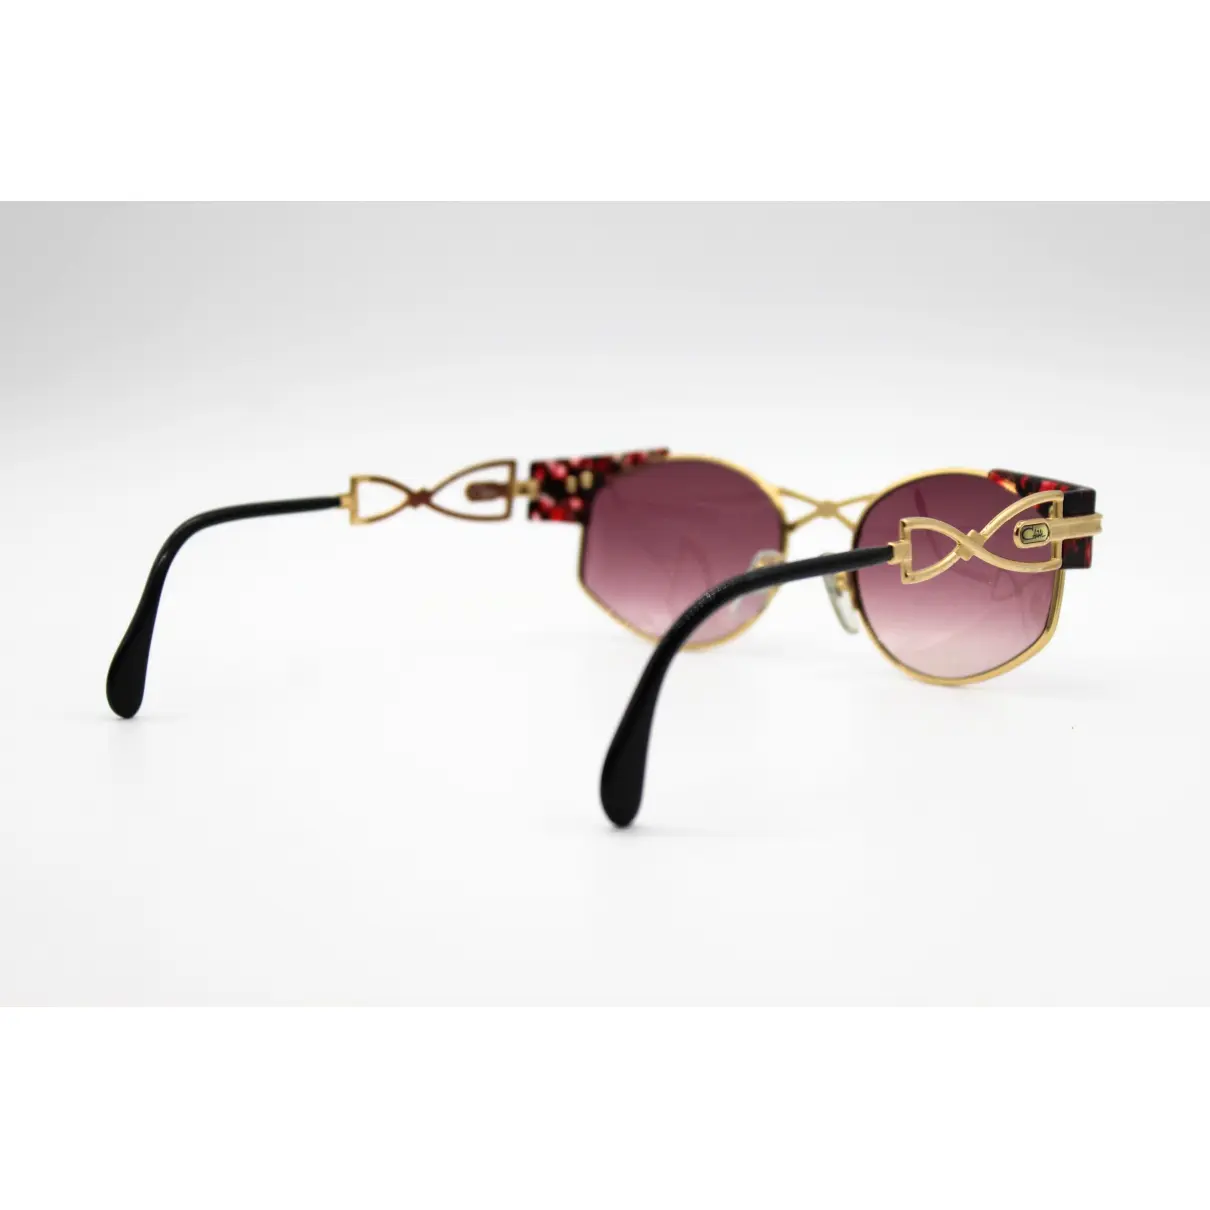 Luxury Cazal Sunglasses Women - Vintage